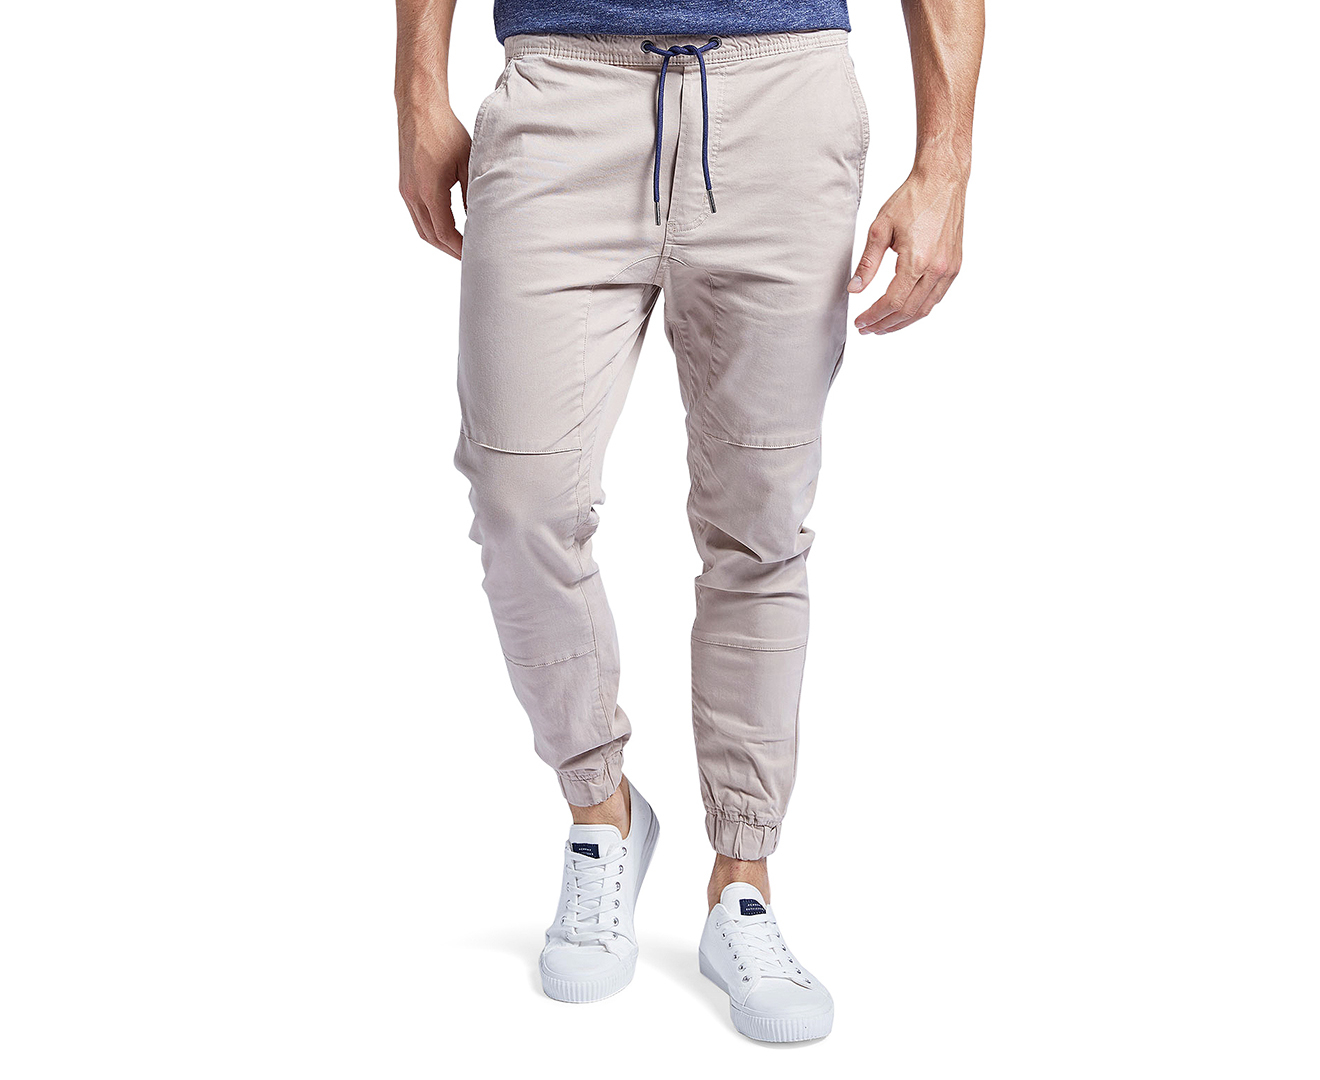 Academy Brand Men's Academy Jogger Pants - Khaki | Catch.co.nz